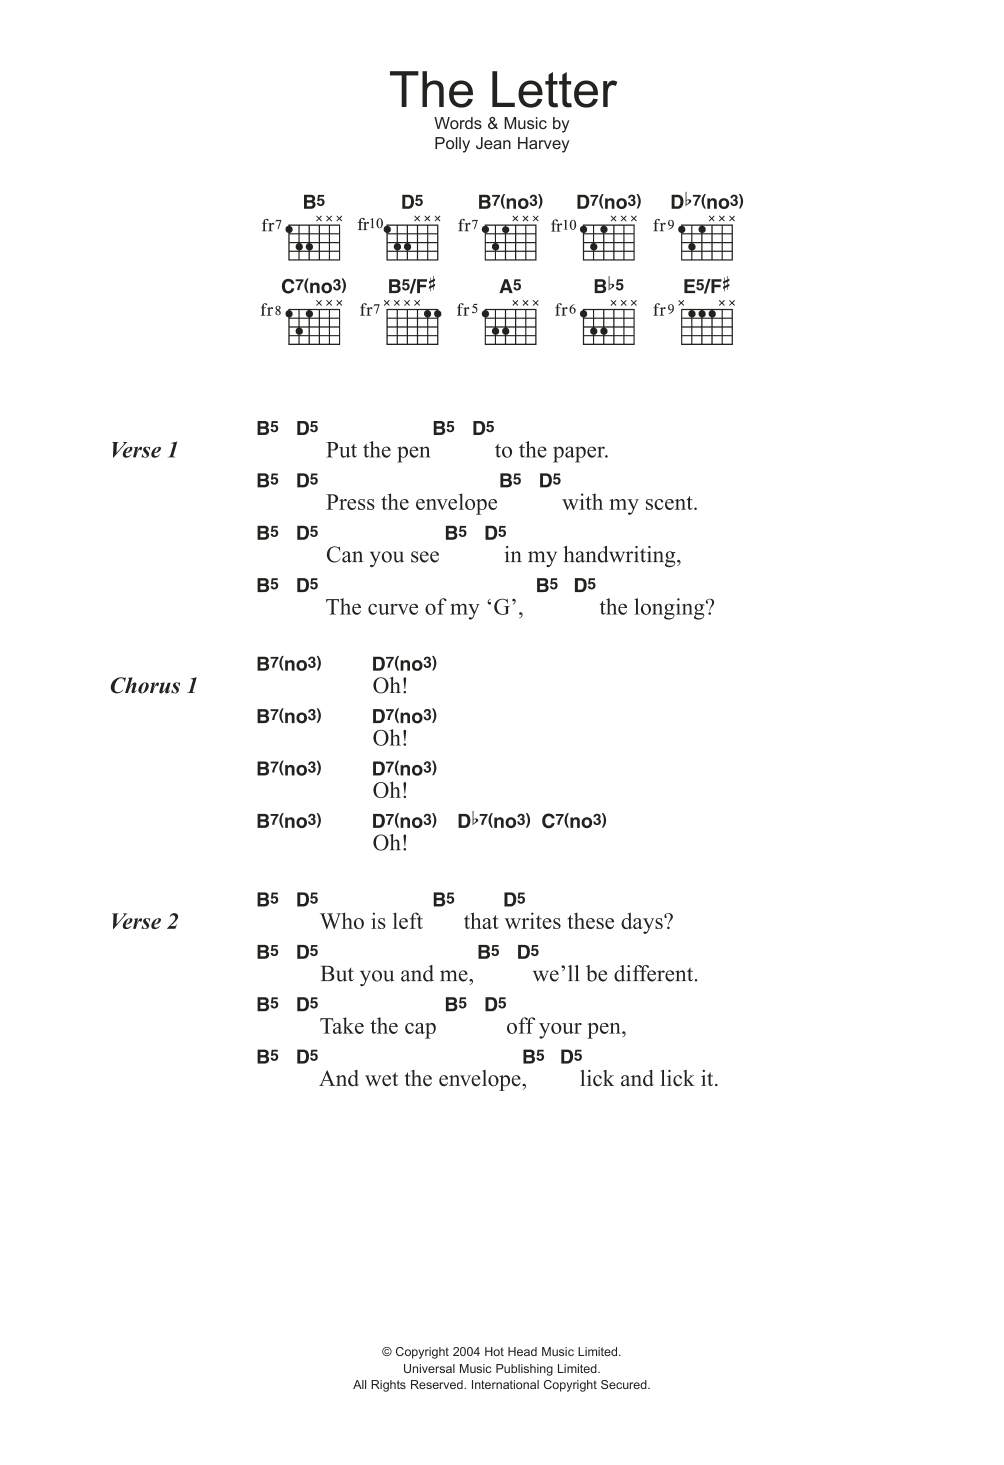 PJ Harvey The Letter Sheet Music Notes & Chords for Guitar Chords/Lyrics - Download or Print PDF